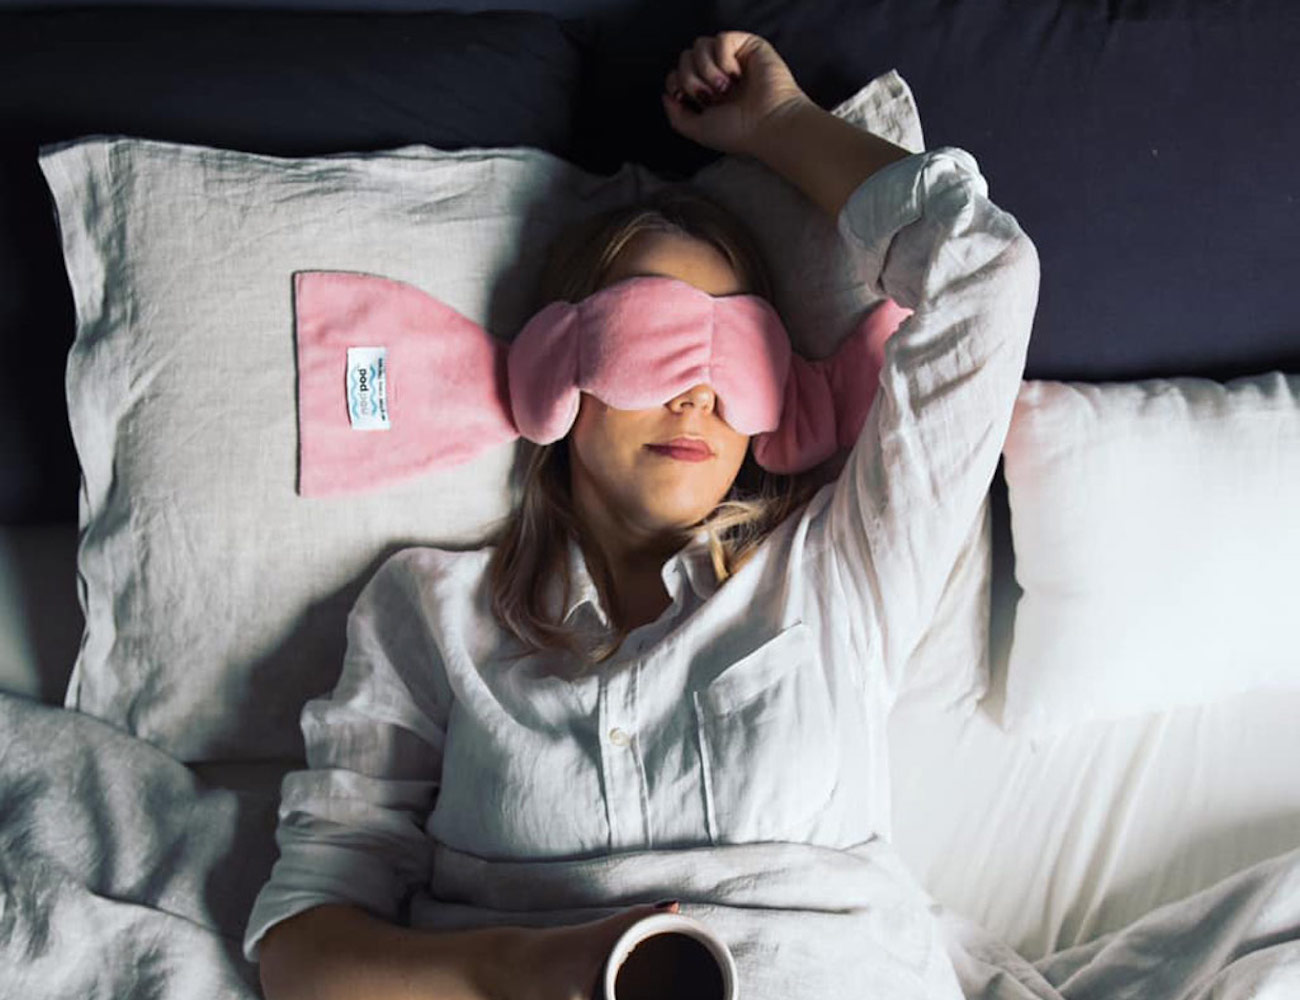 nodpod Weighted Sleep Mask promotes deep and restful sleep